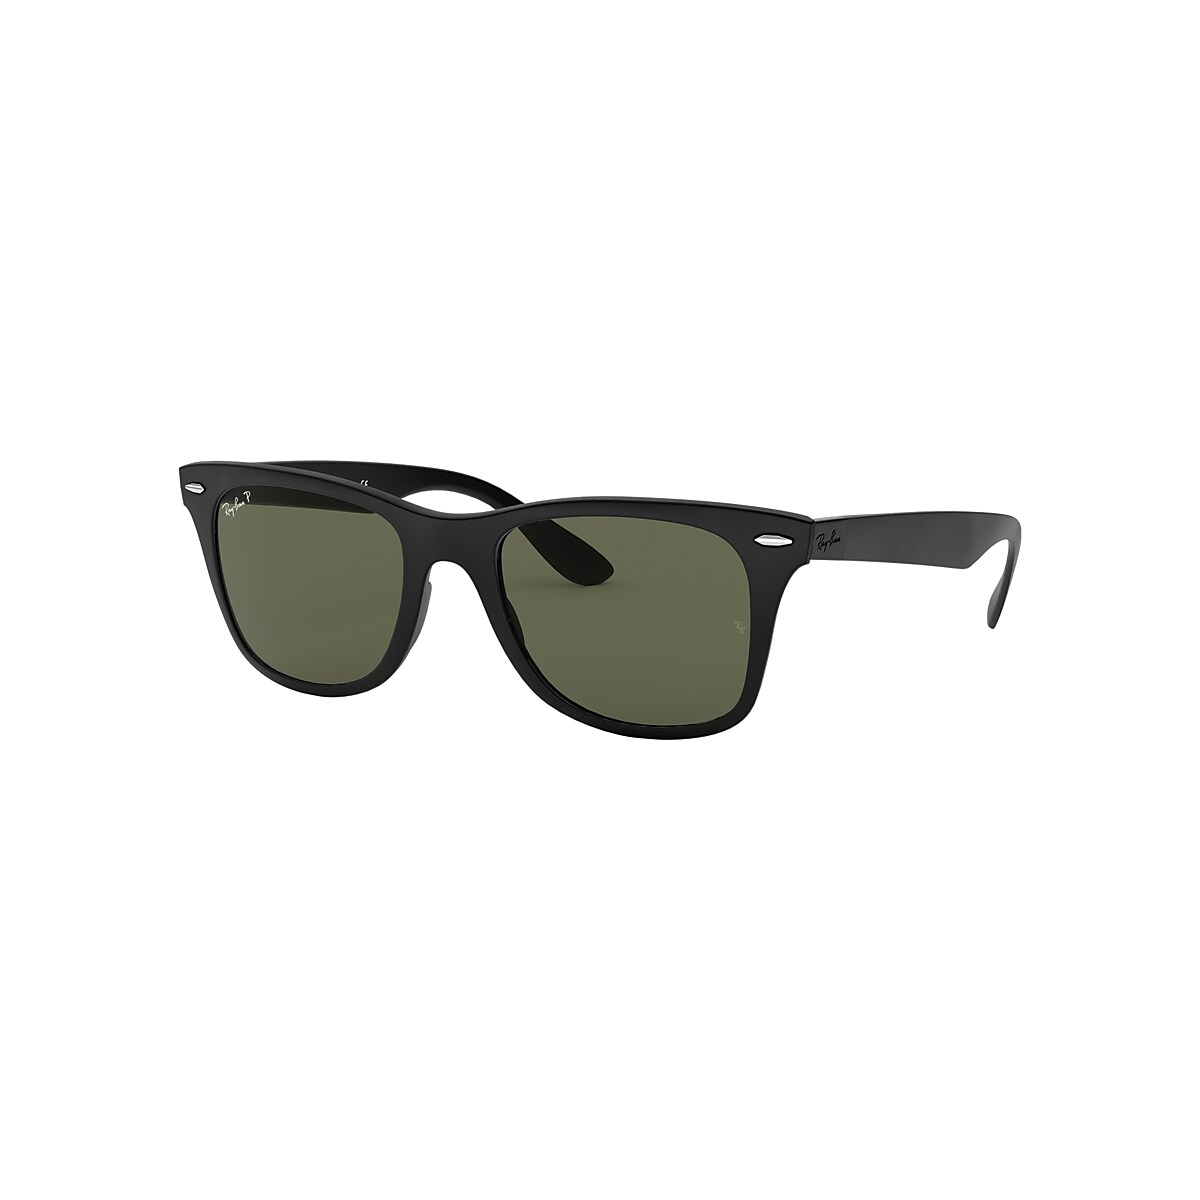 Wayfarer Liteforce Sunglasses in Black and Green - Ray-Ban